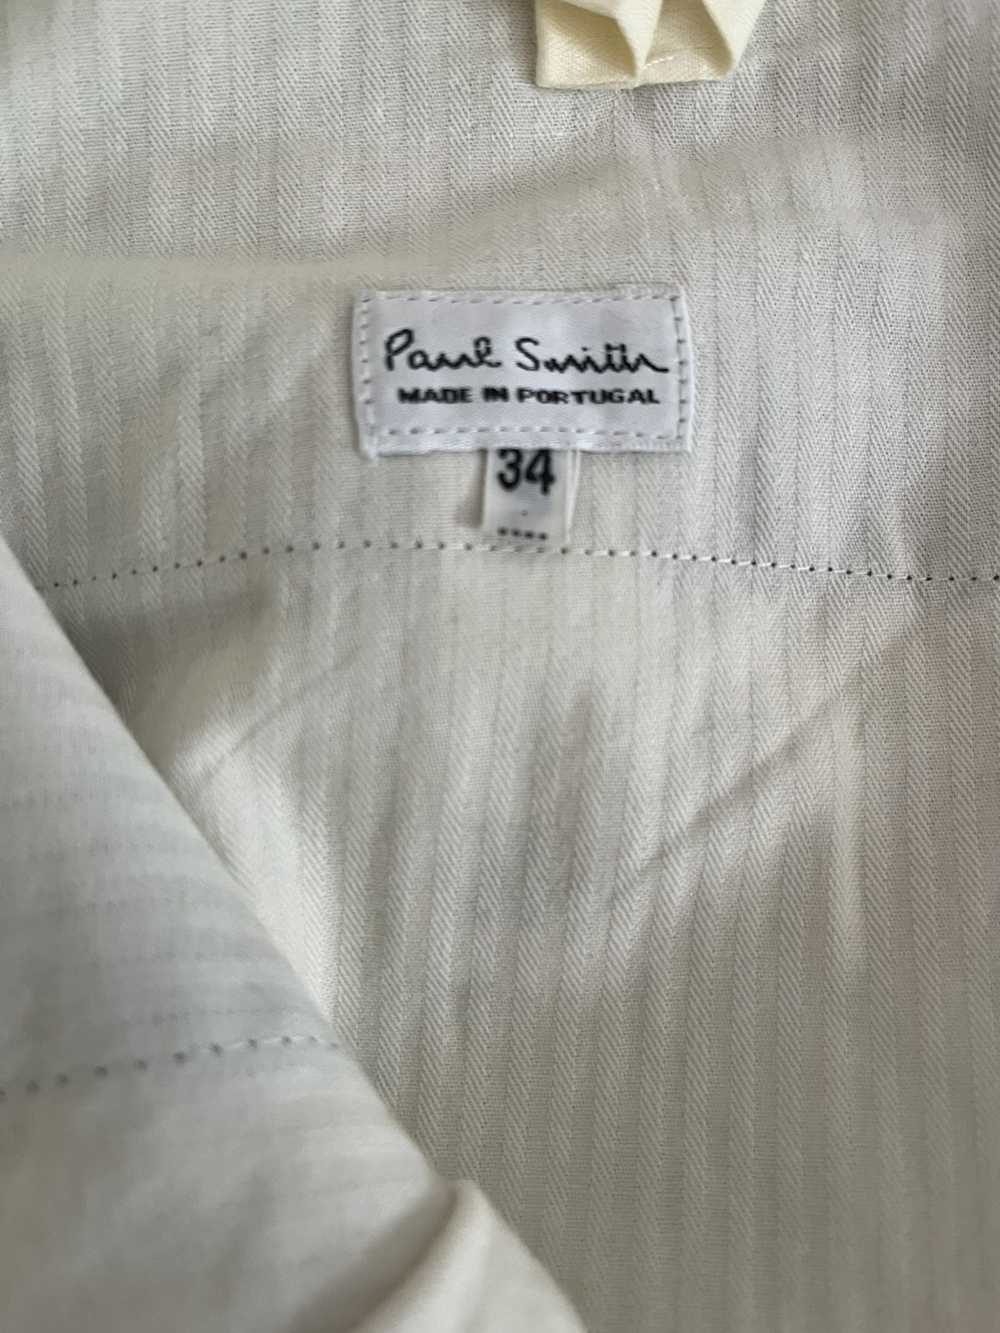 Paul Smith Paul smith trousers - image 2